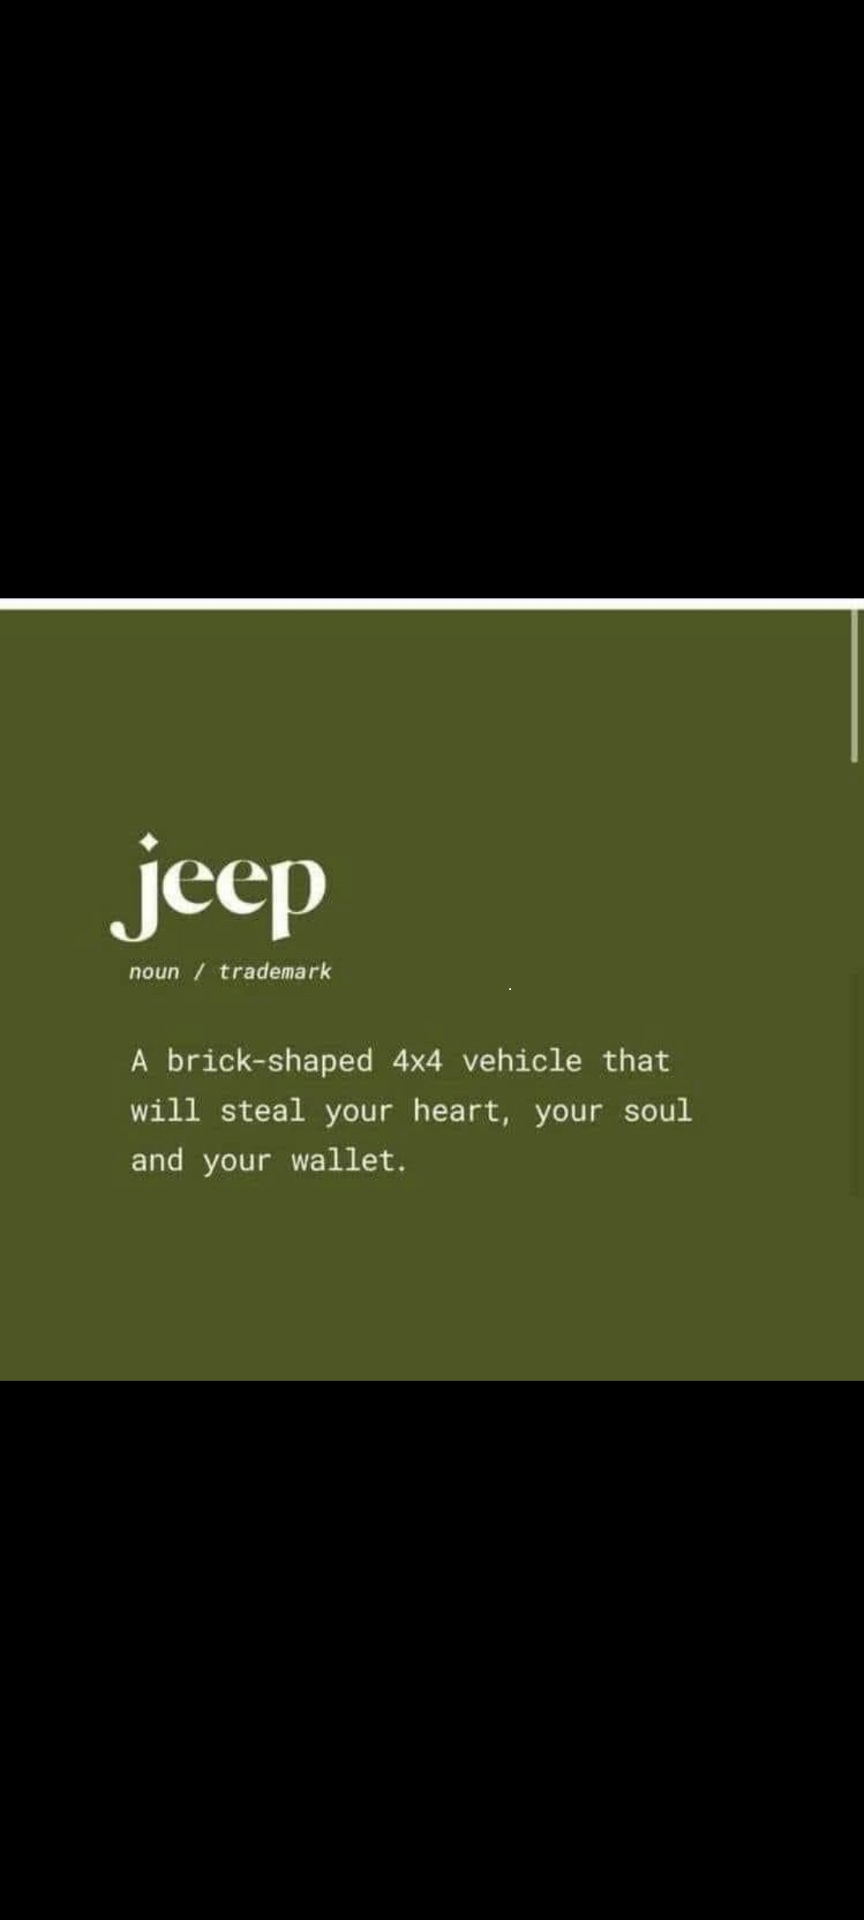 jeep.jpg